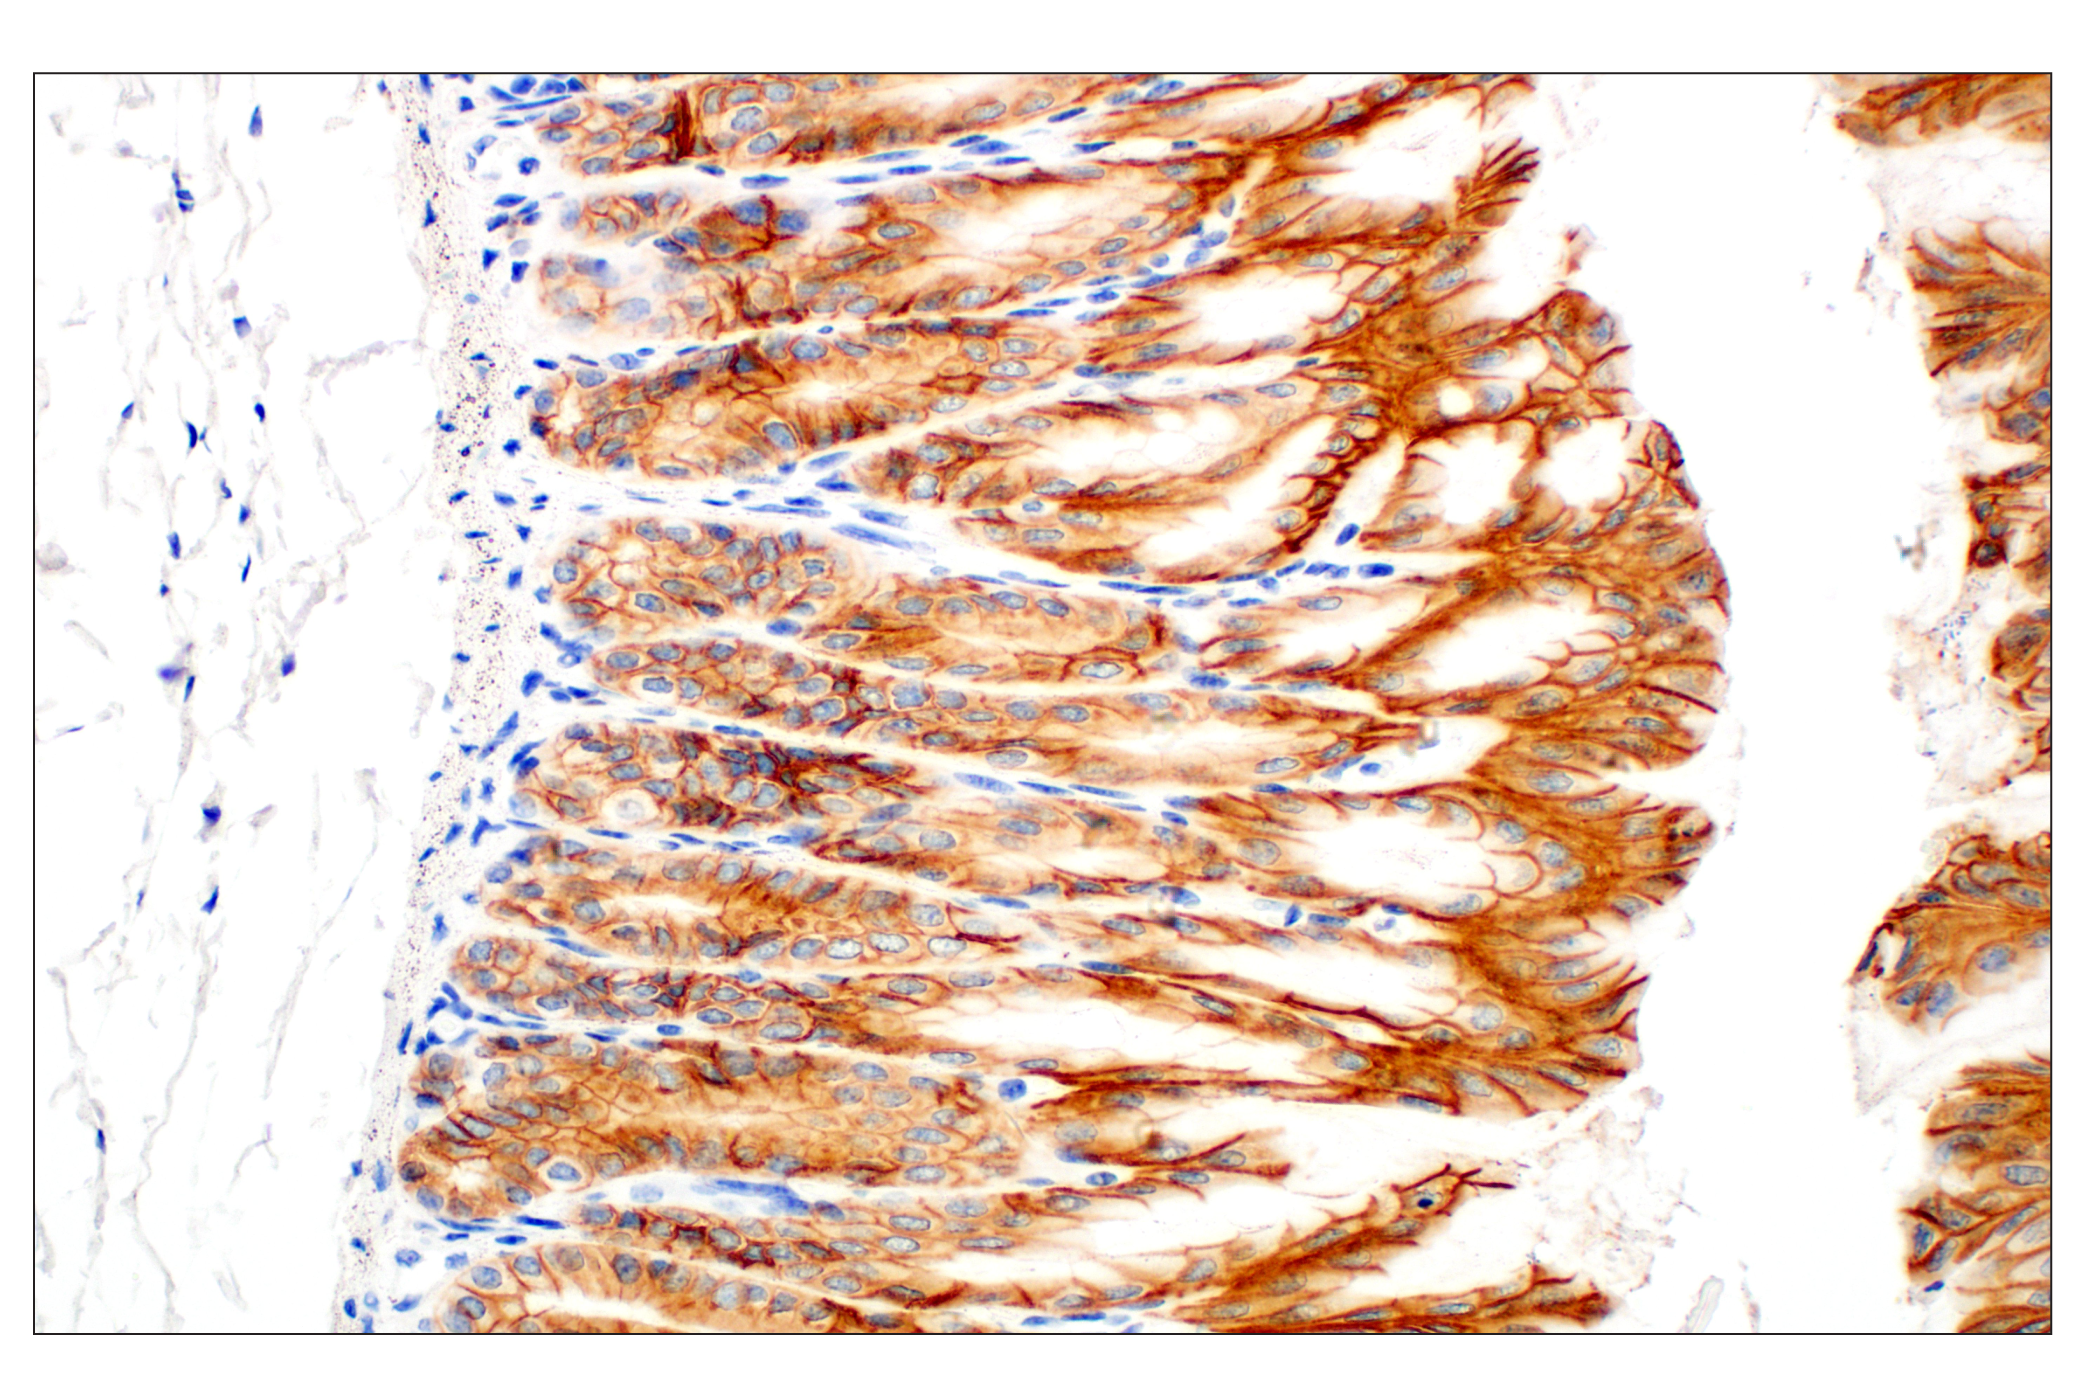  Image 51: Epithelial-Mesenchymal Transition (EMT) IF Antibody Sampler Kit